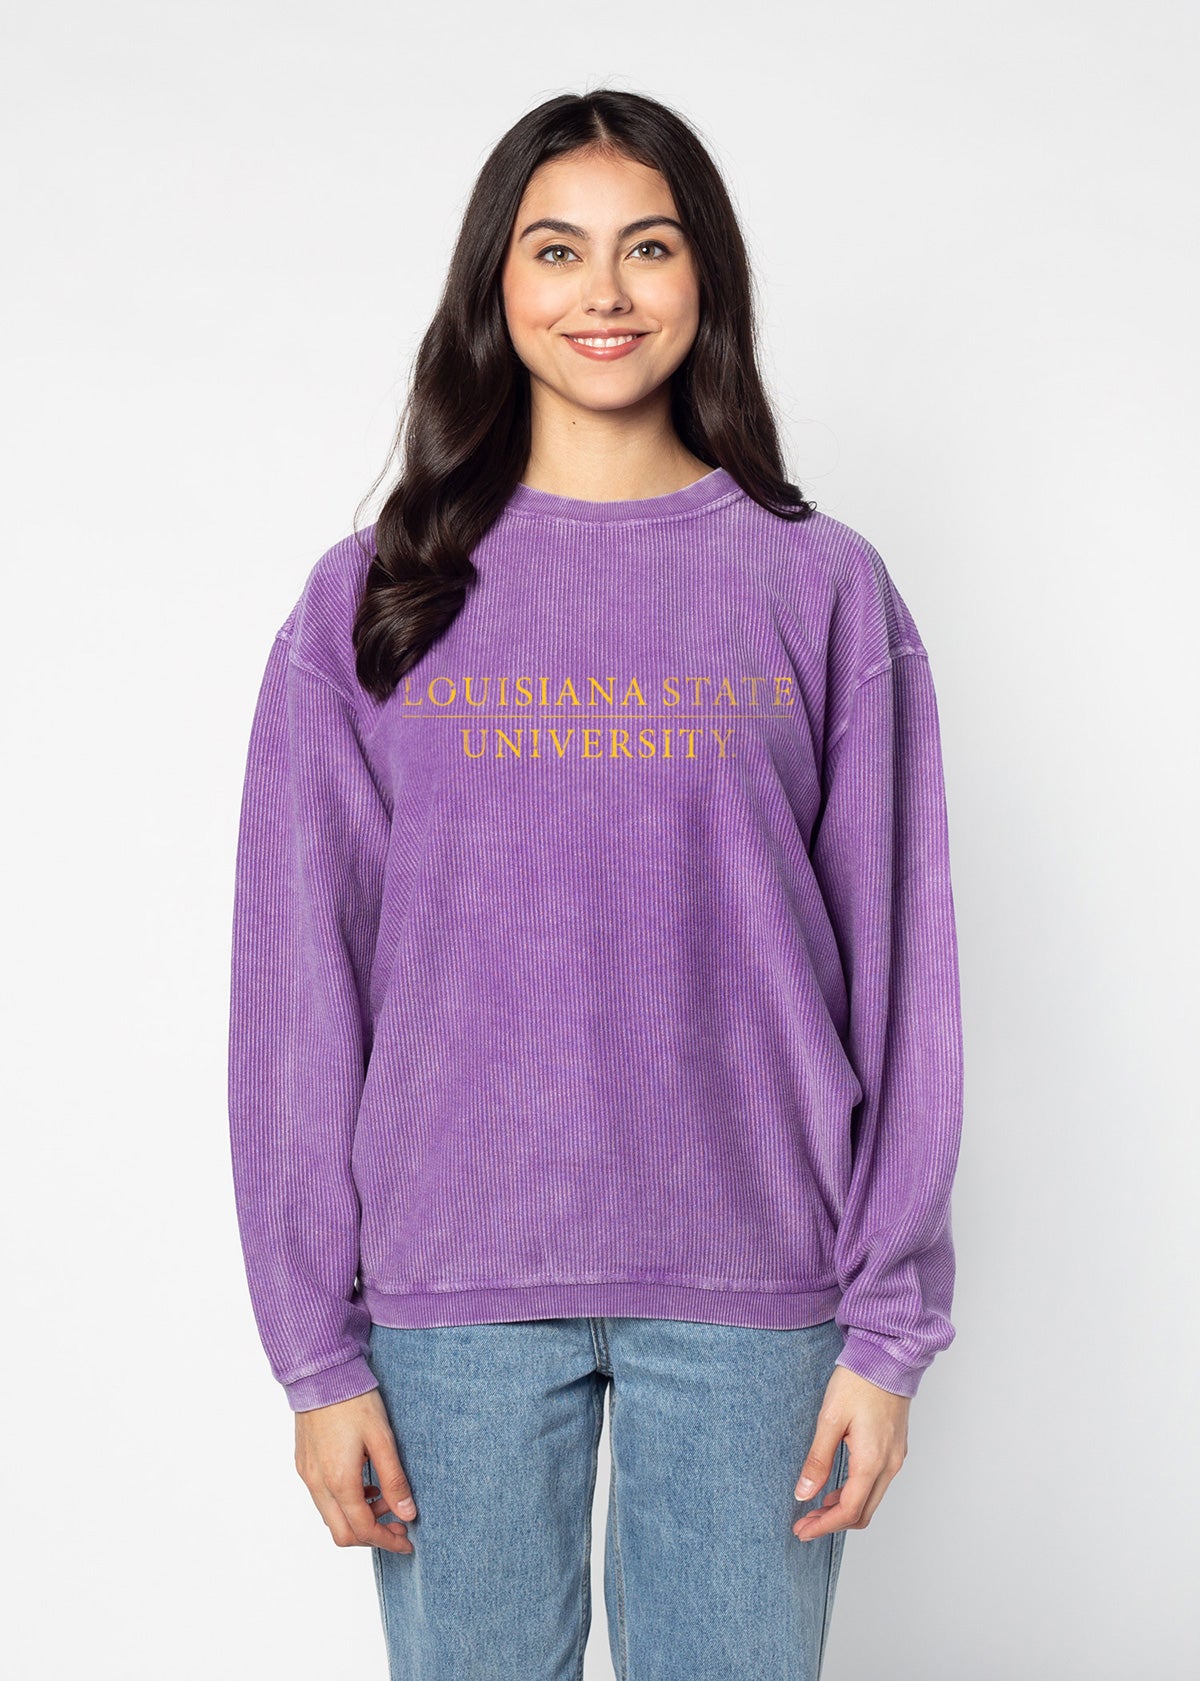 Louisiana Hoodie: Louisiana Hooded Sweatshirt / College Style